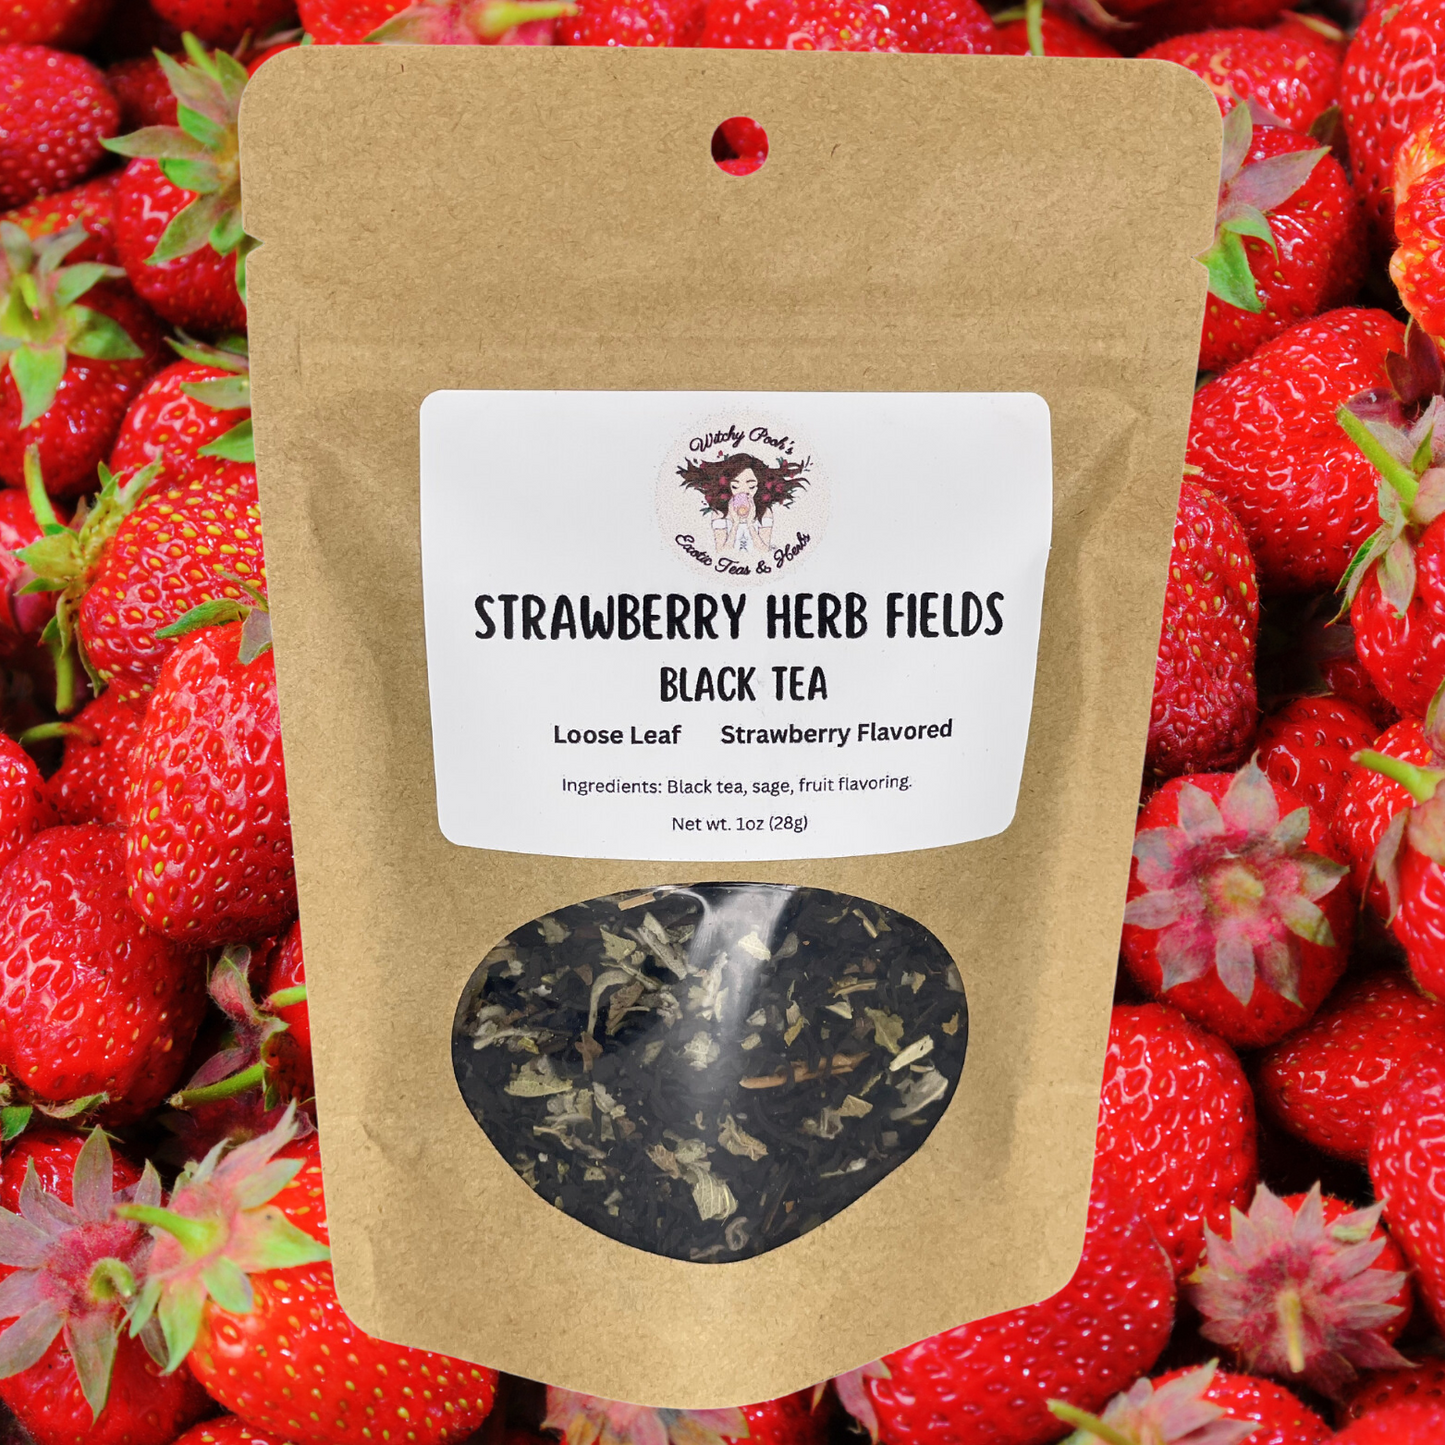 Strawberry Herb Fields Strawberry Flavored Black Loose Leaf Tea with Sage Leaf